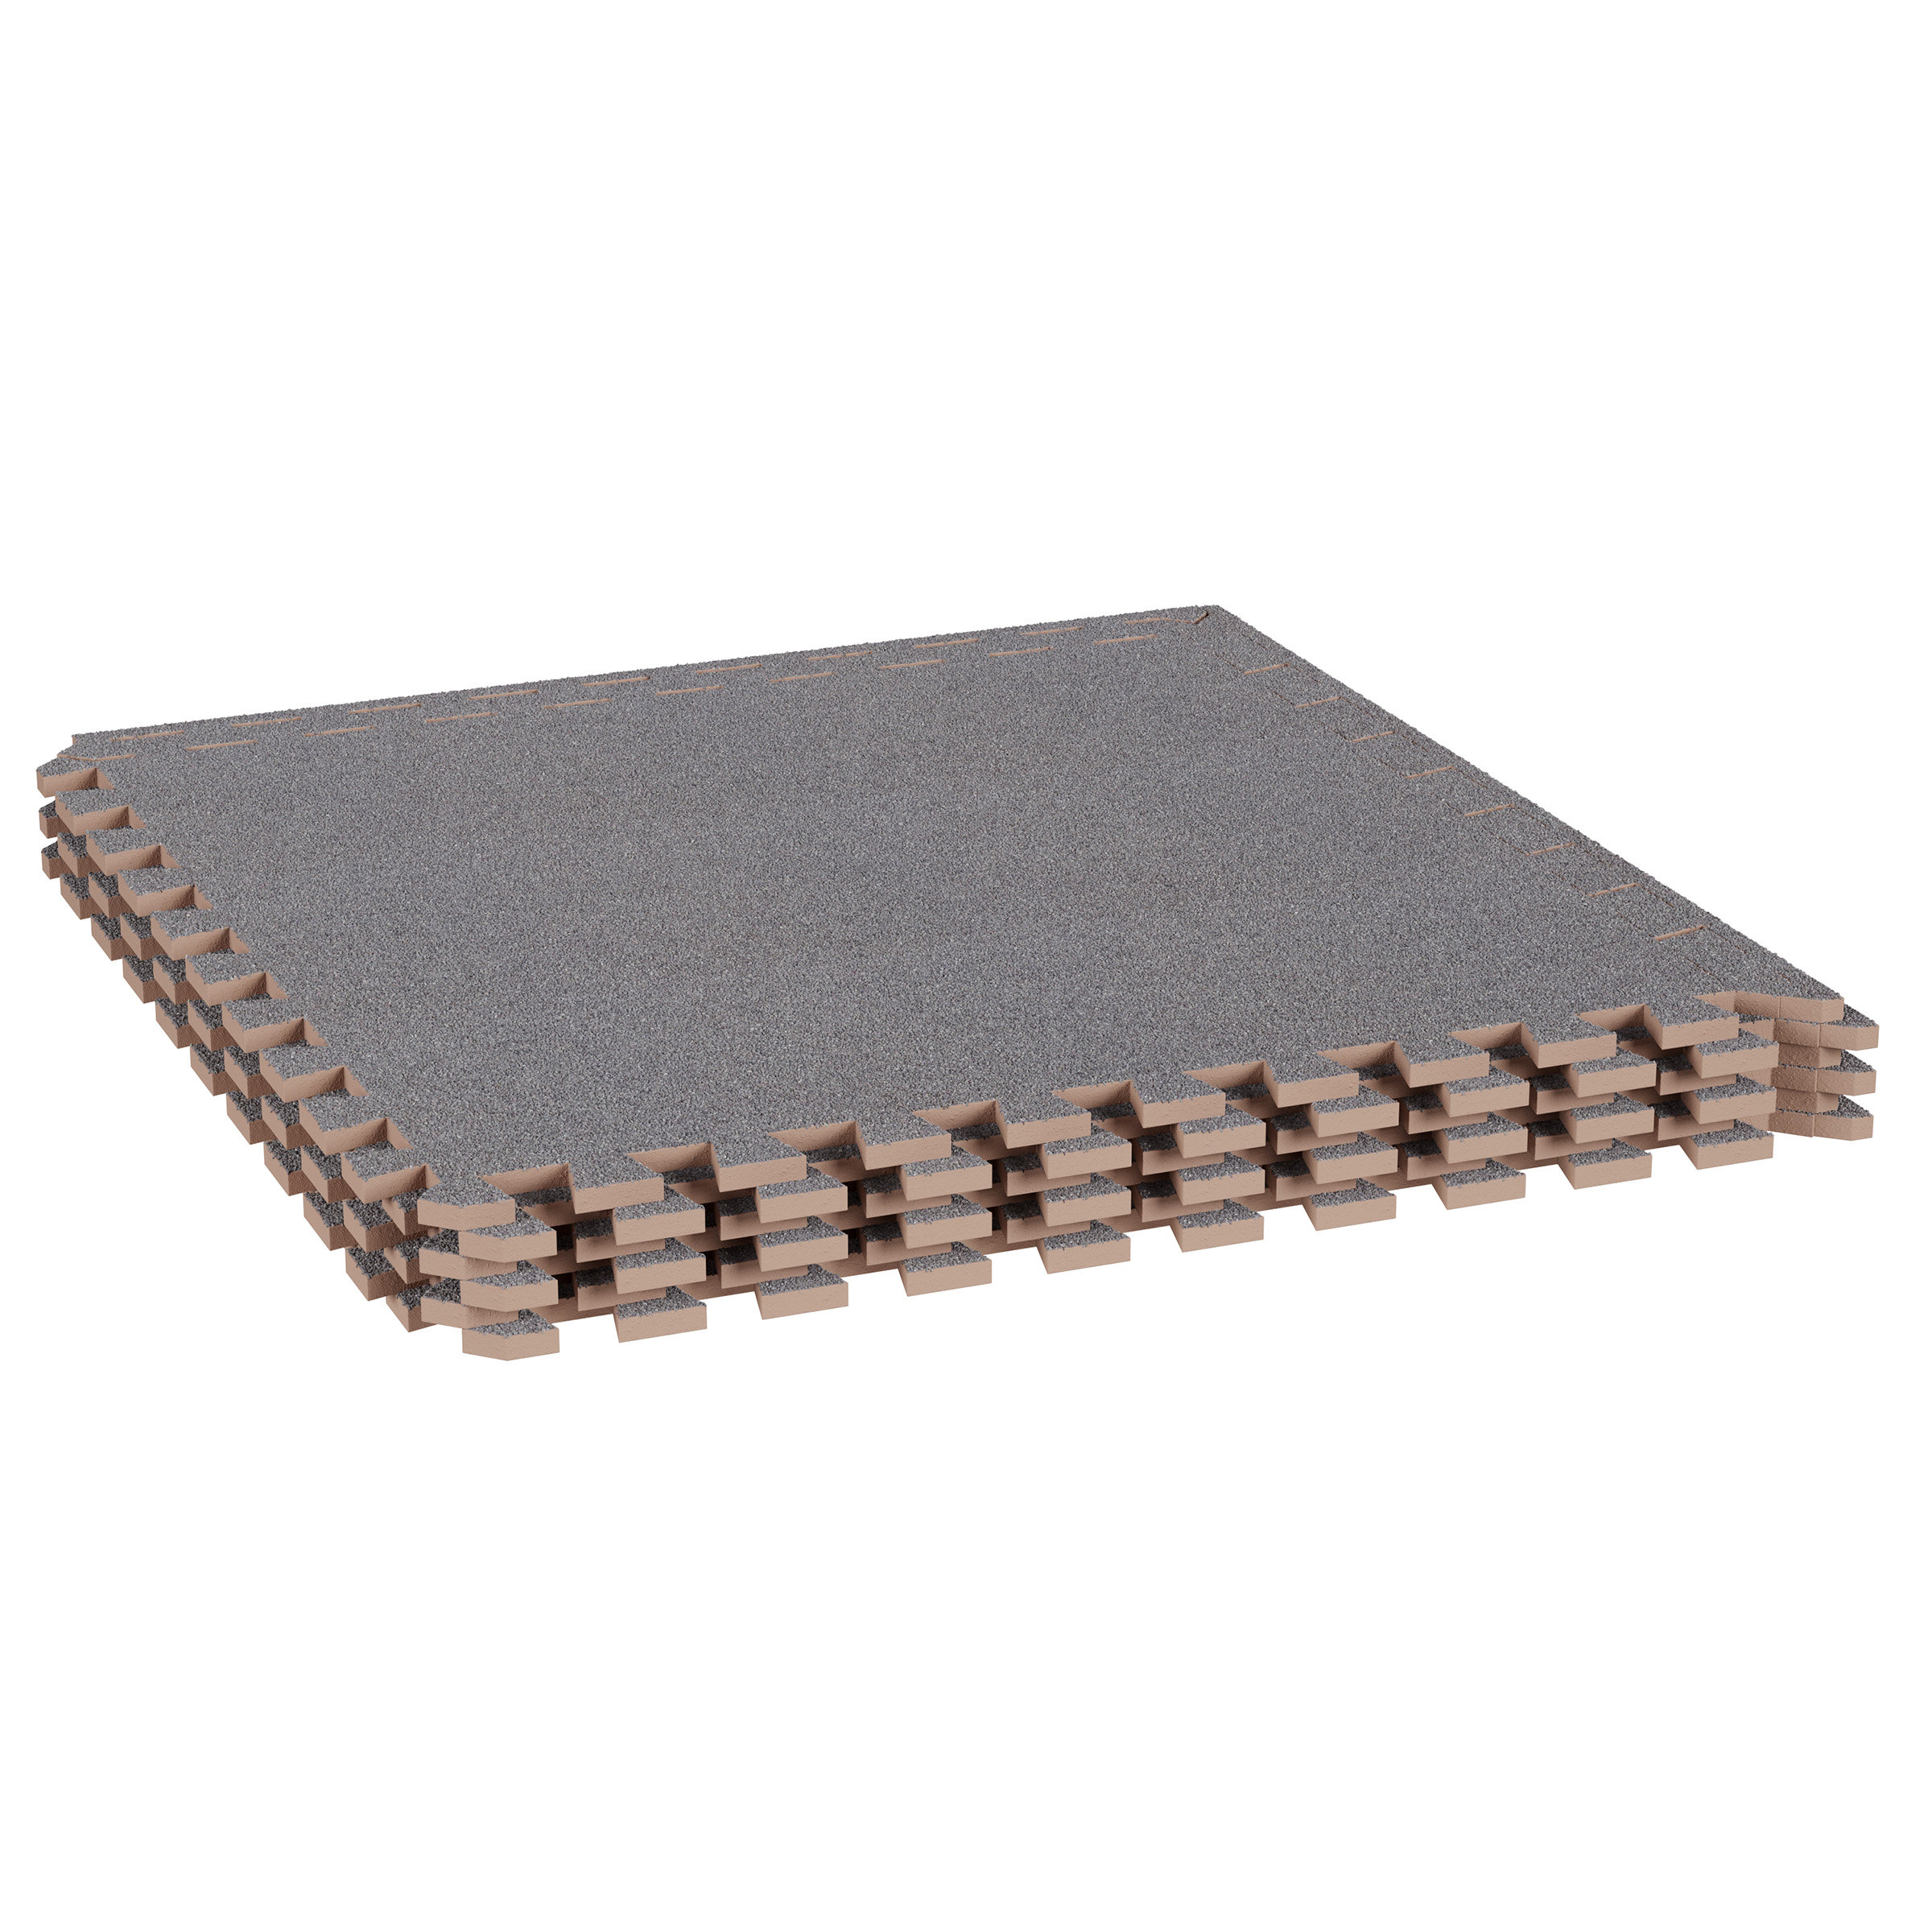 Stalwart Foam Mat Floor Tiles 6PC Set - Interlocking EVA Foam Padding With  Soft Carpet Top For Exercise, Yoga, Playroom, Garage, Or Basement By  Stalwart (Gray)